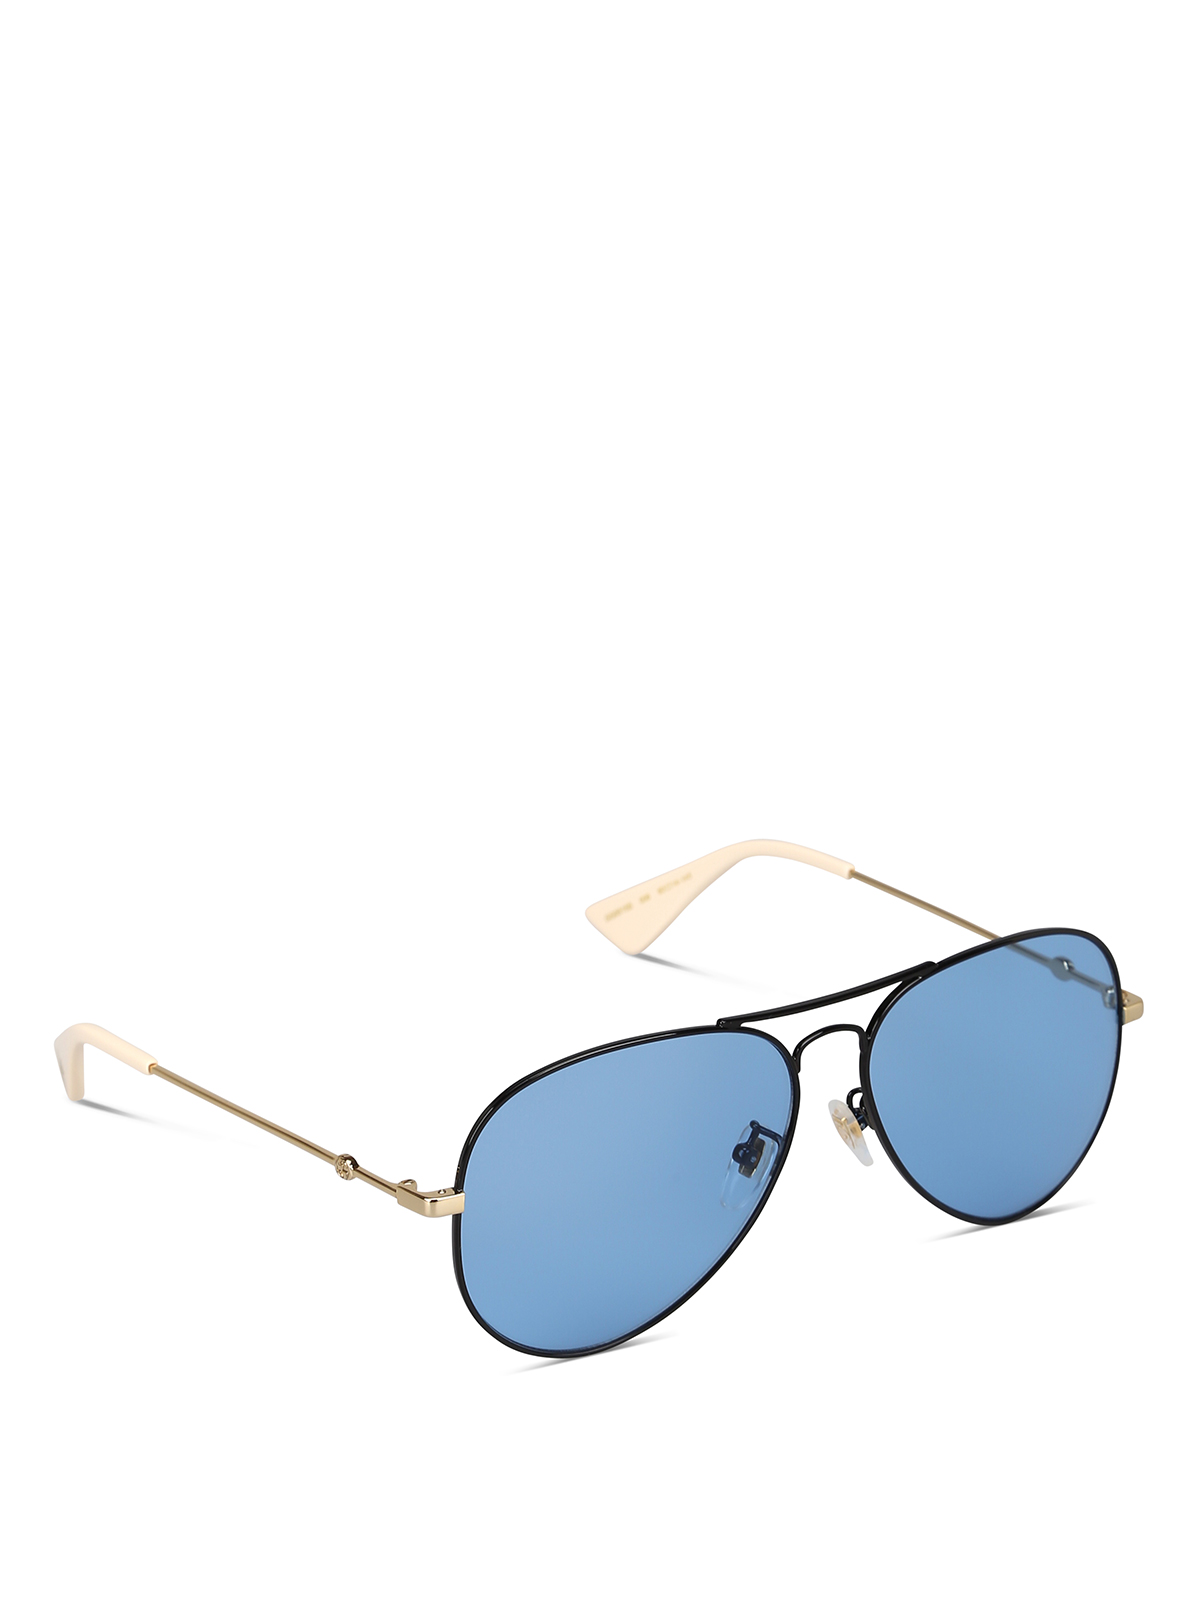 gucci blue tint sunglasses